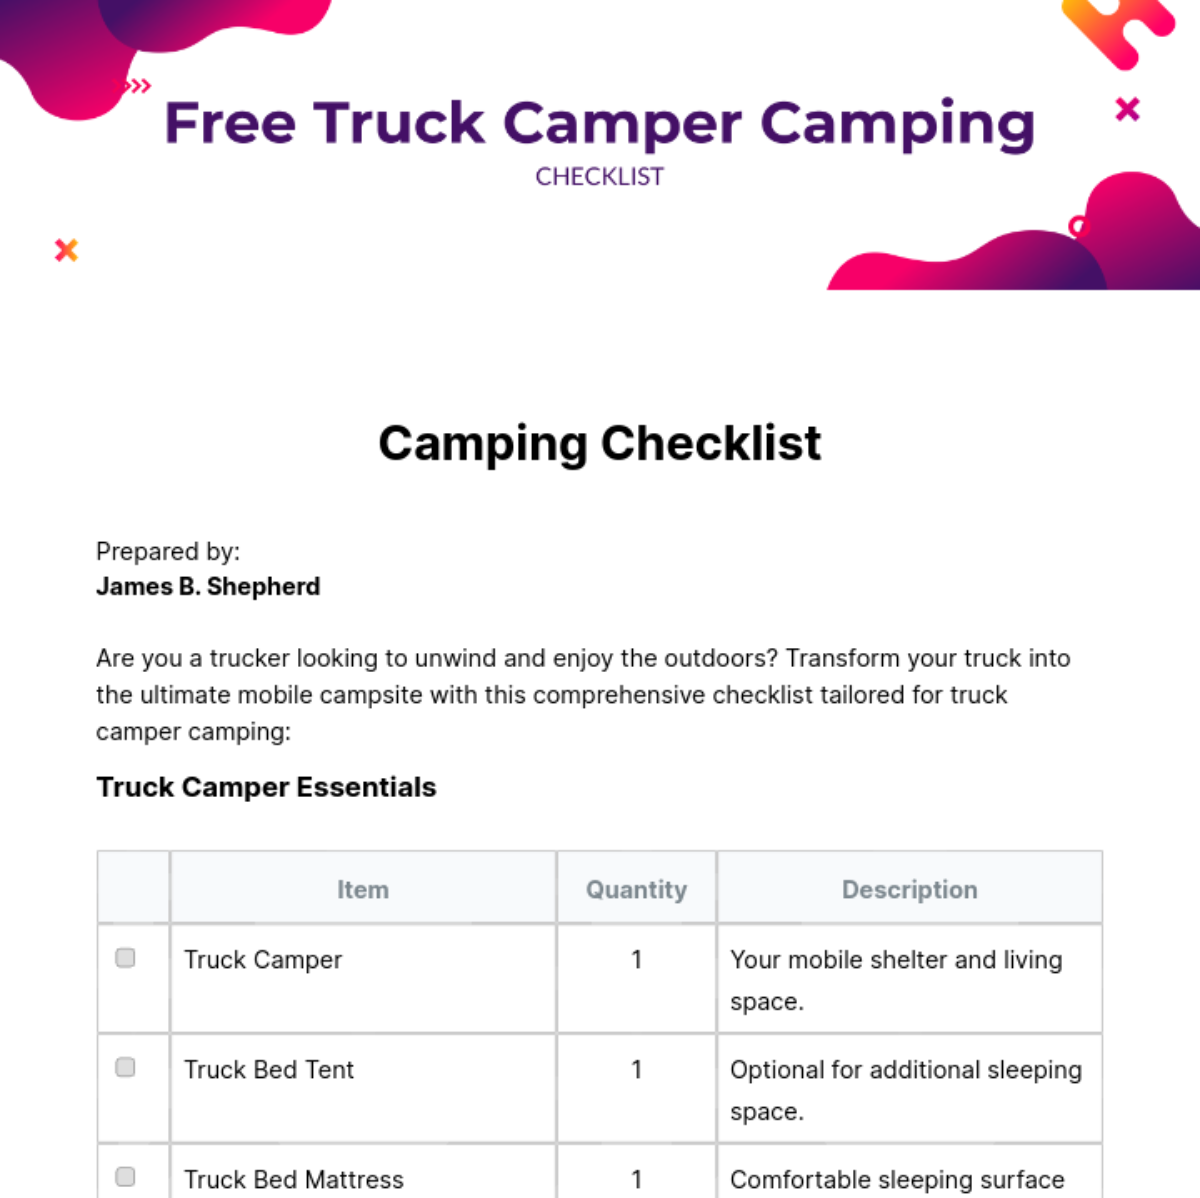 Truck Camper Camping Checklist Template